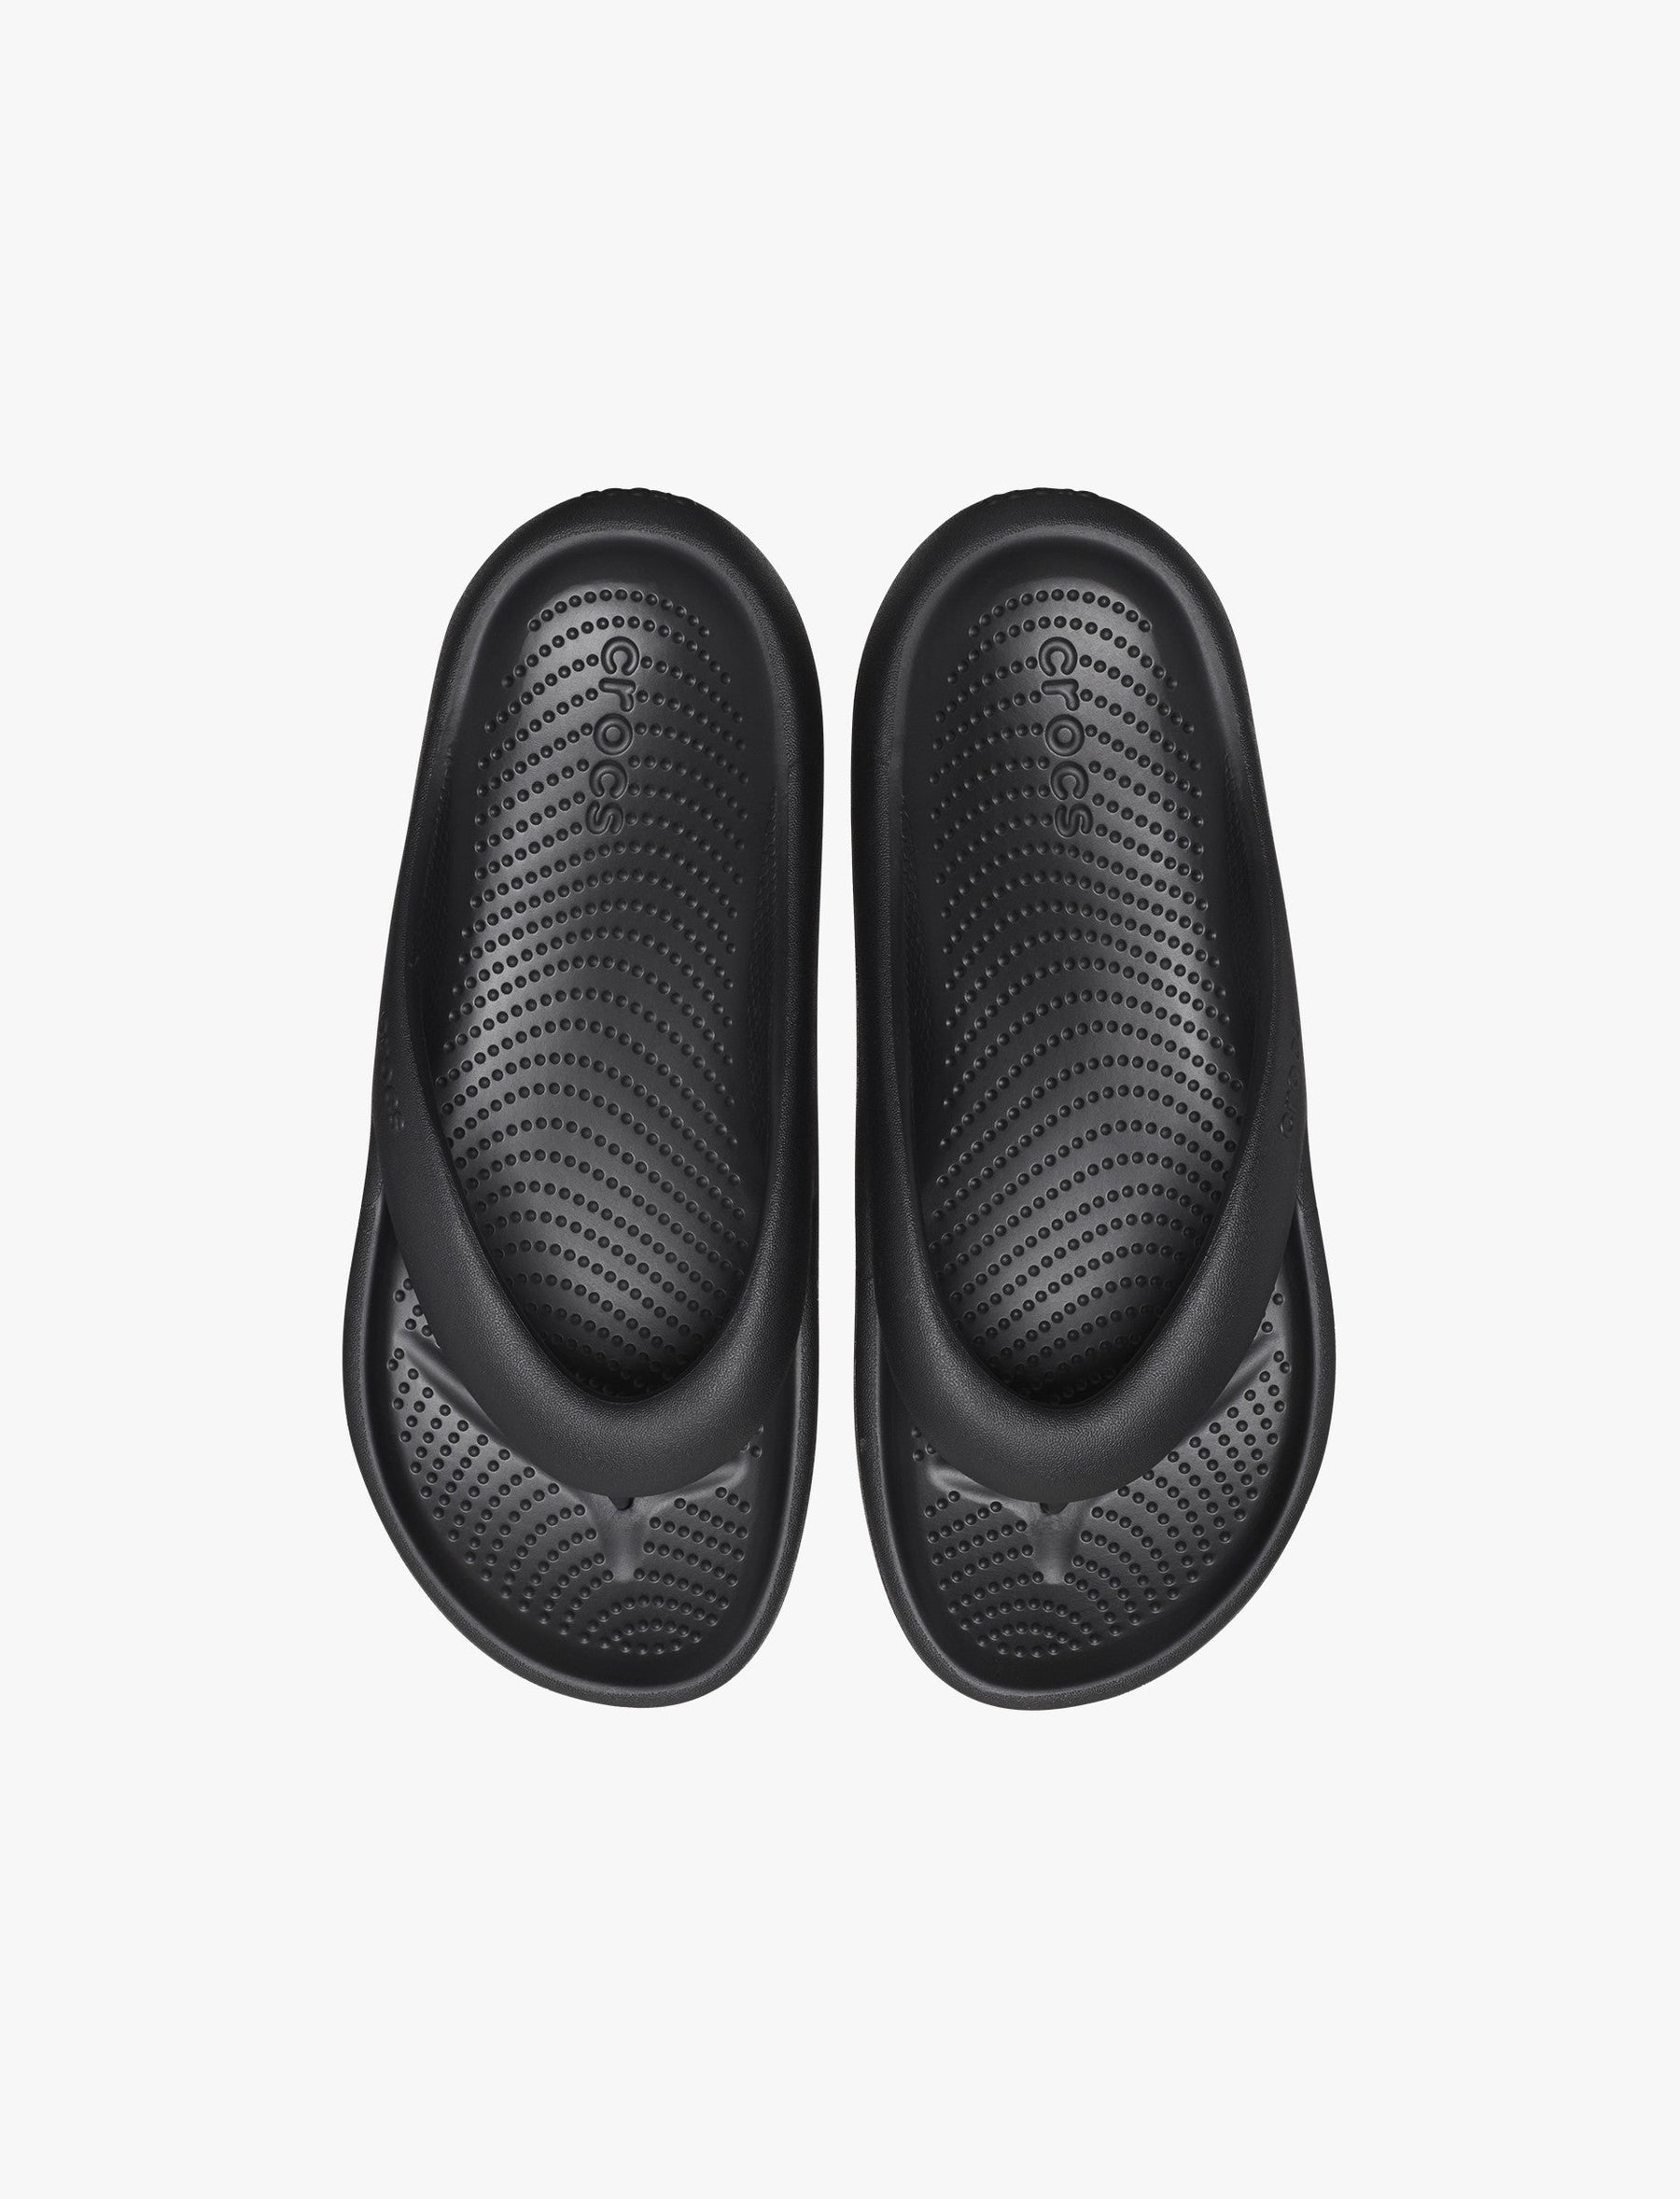 Crocs Mellow Flip - כפכפי אצבע קרוקס לנשים דגם מילו בצבע שחור-Crocs-37-38-נאקו